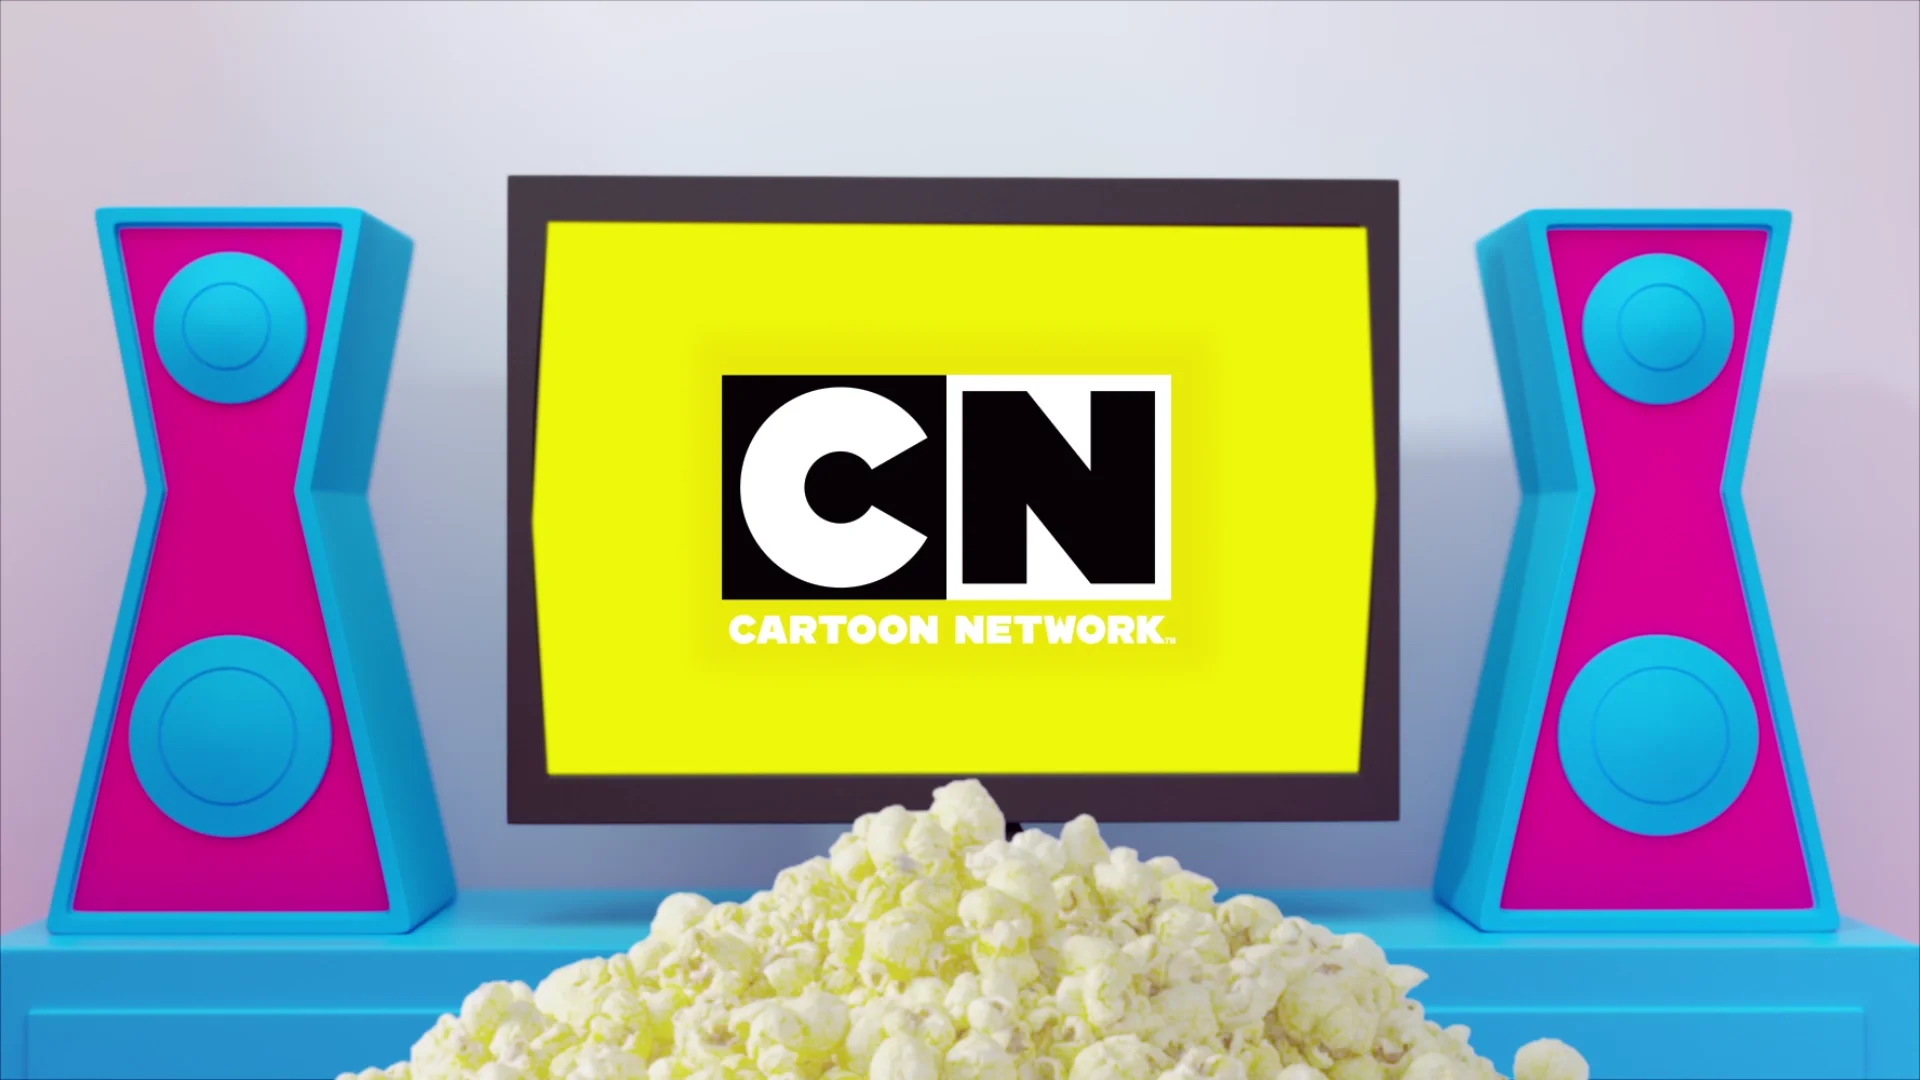 Cartoon Network Logos on Vimeo